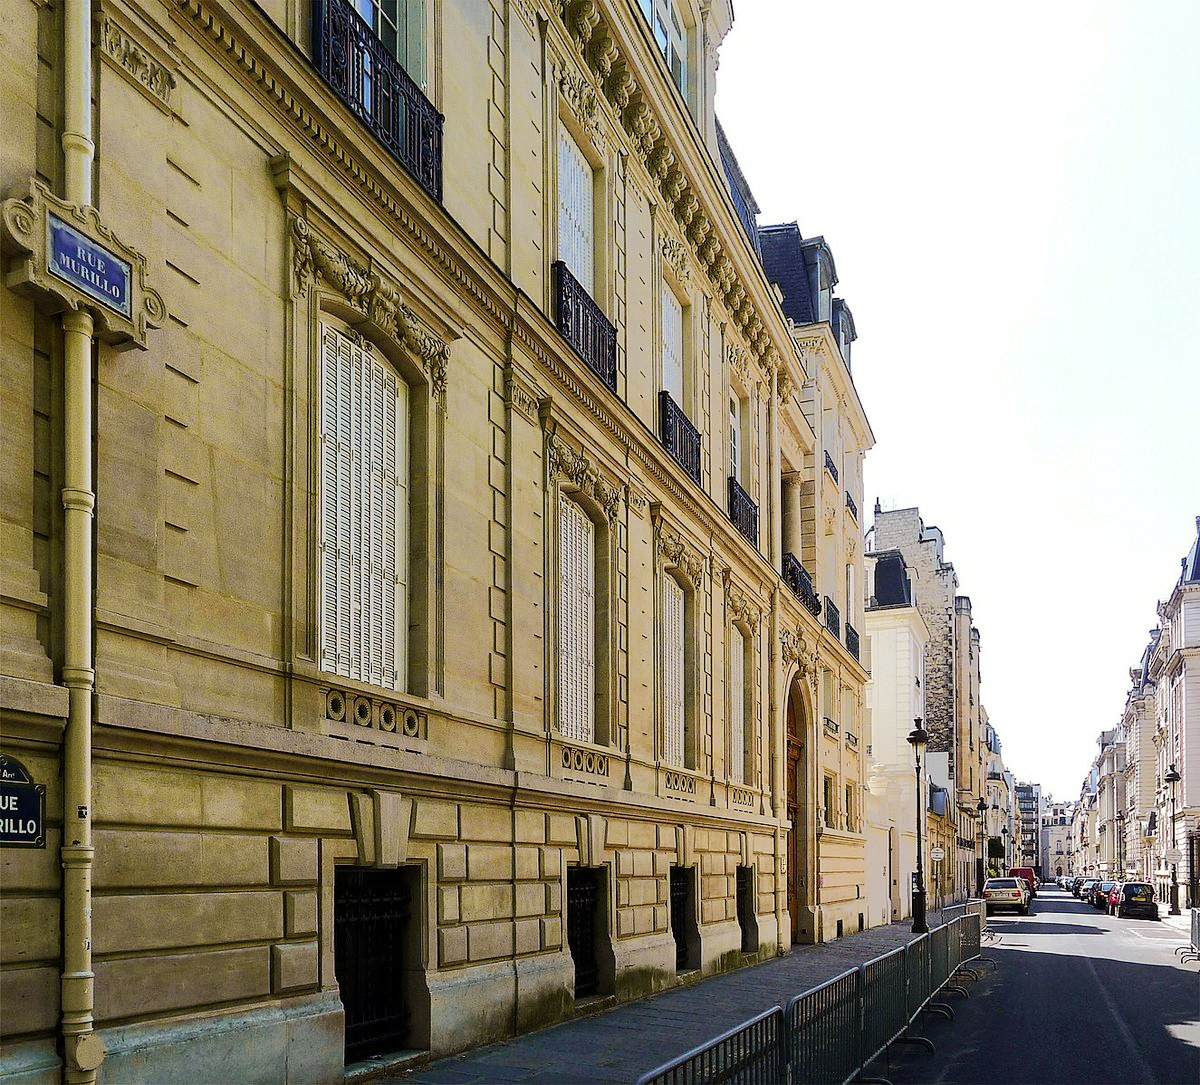 The Rue Murillo in Paris